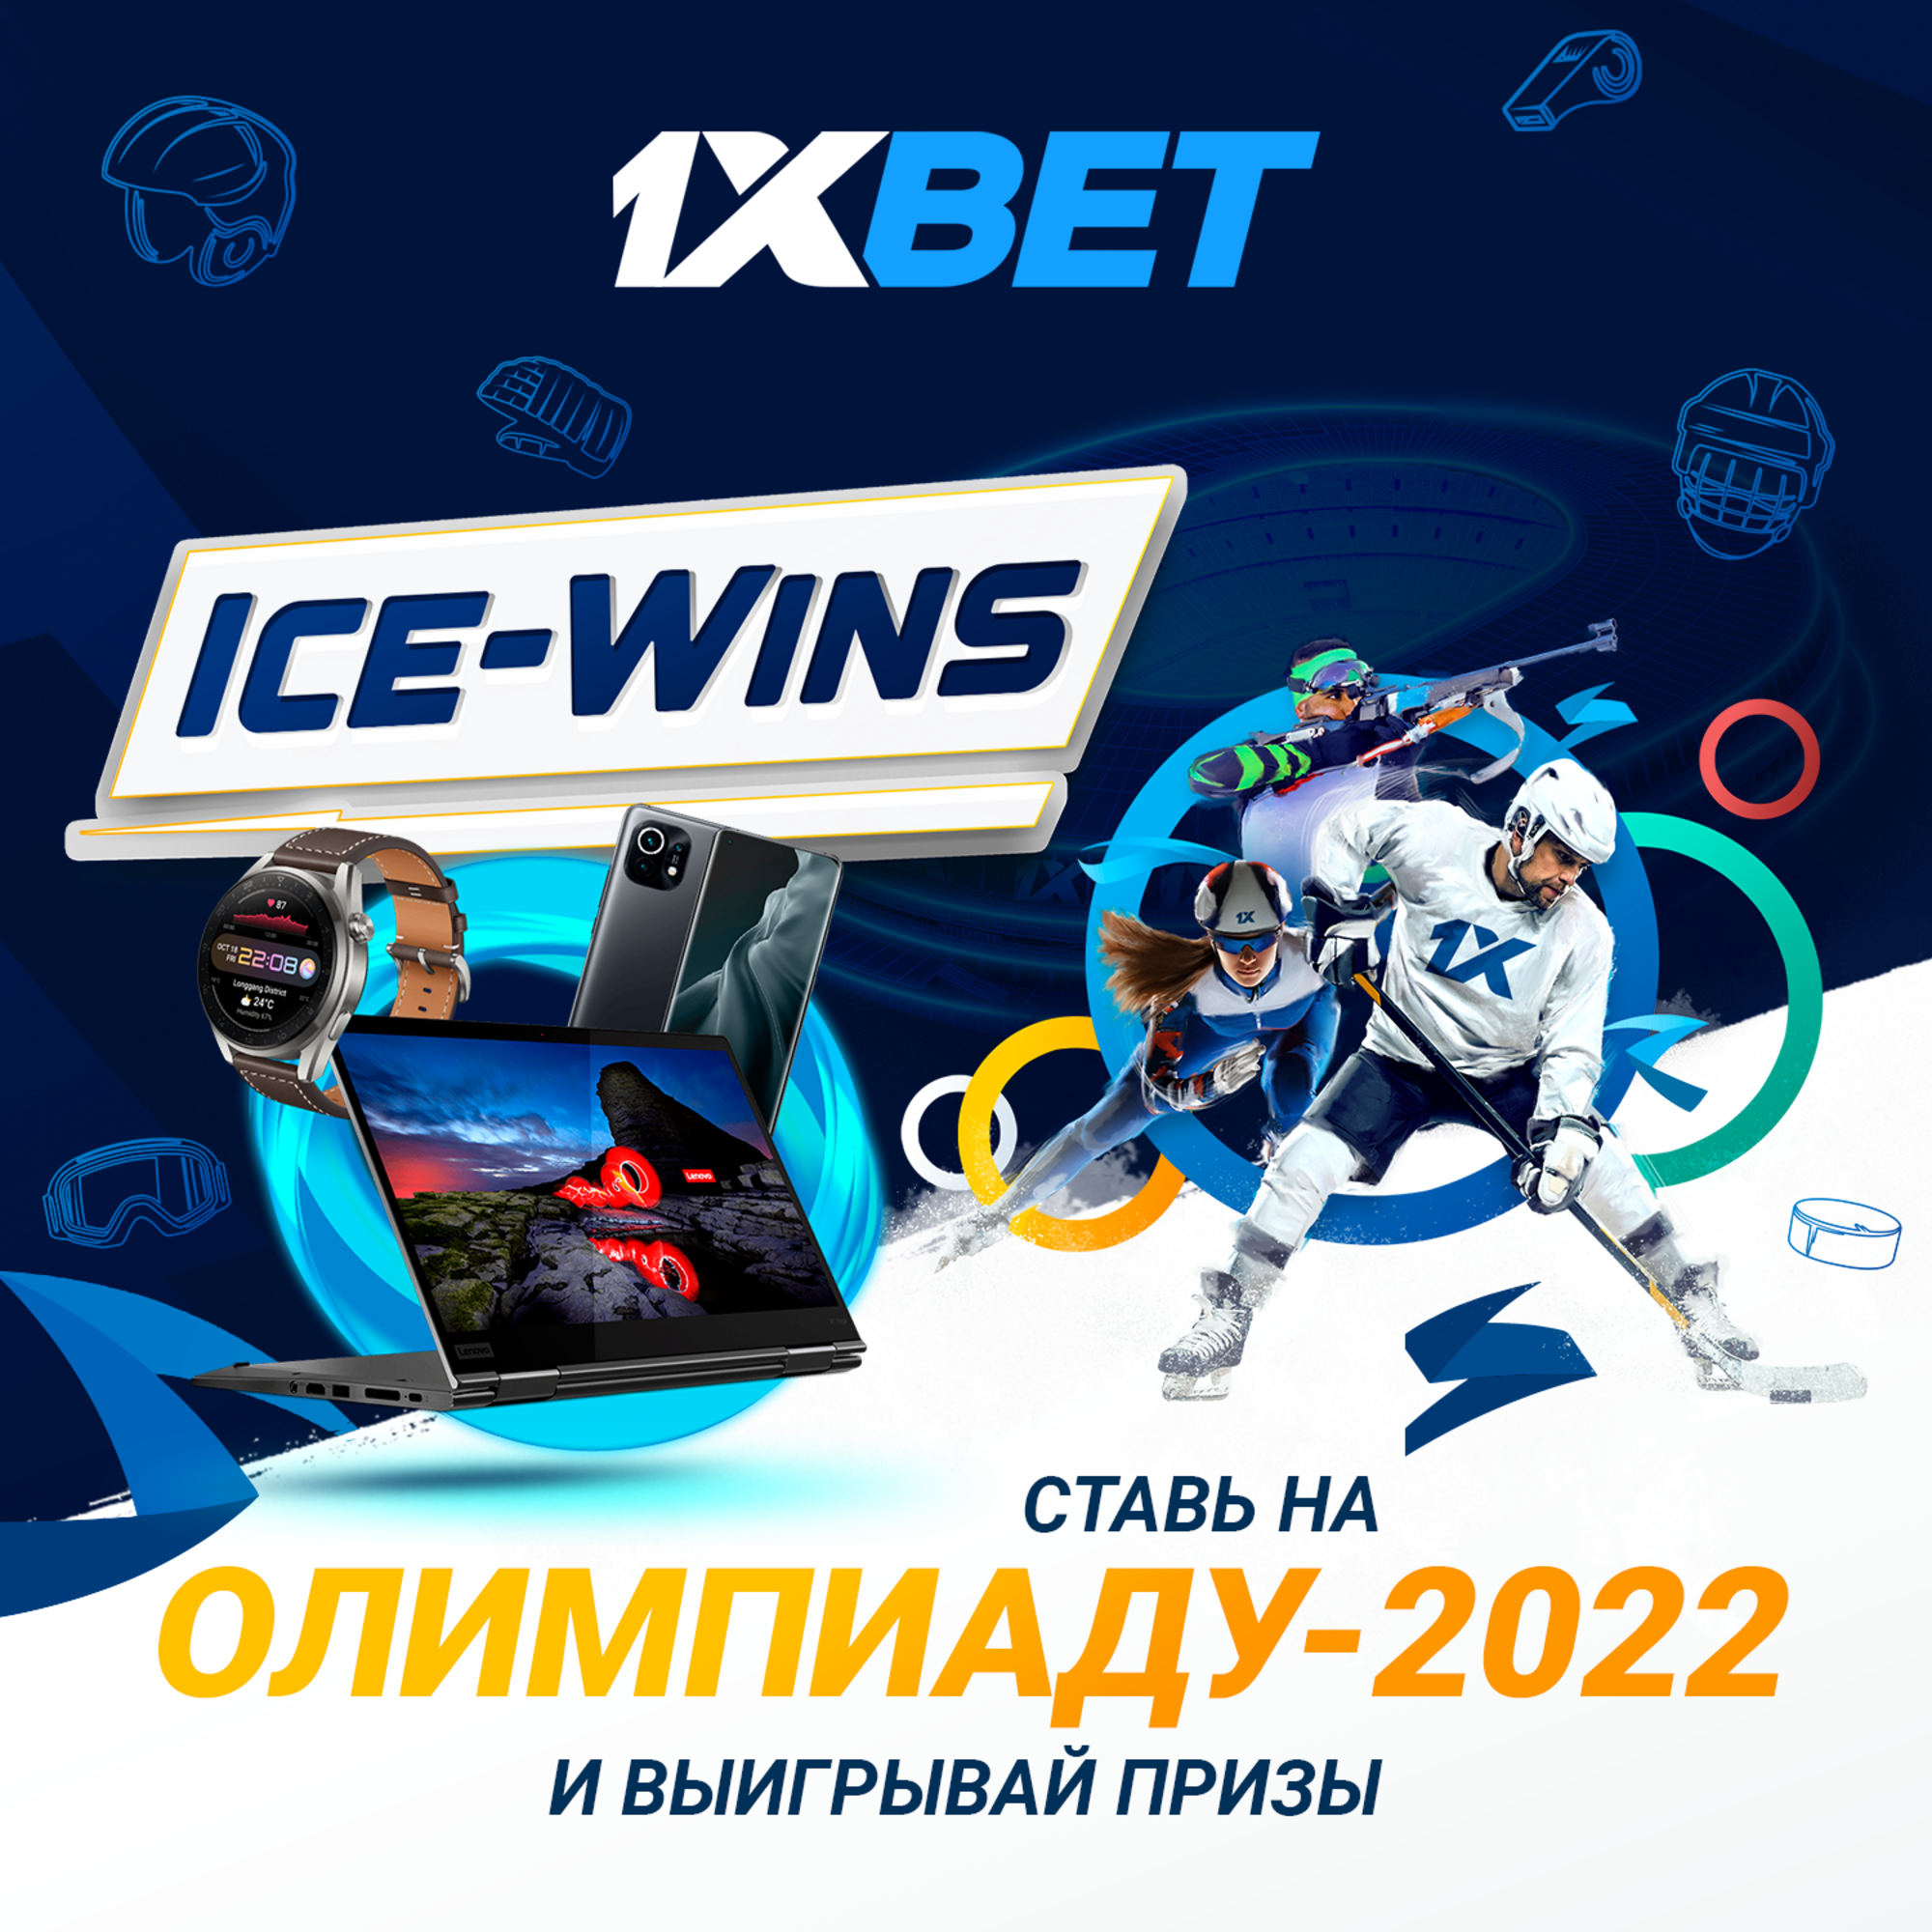 1xBet запускает акцию Ice-Wins за ставки на события зимних Олимпийских Игр 2022